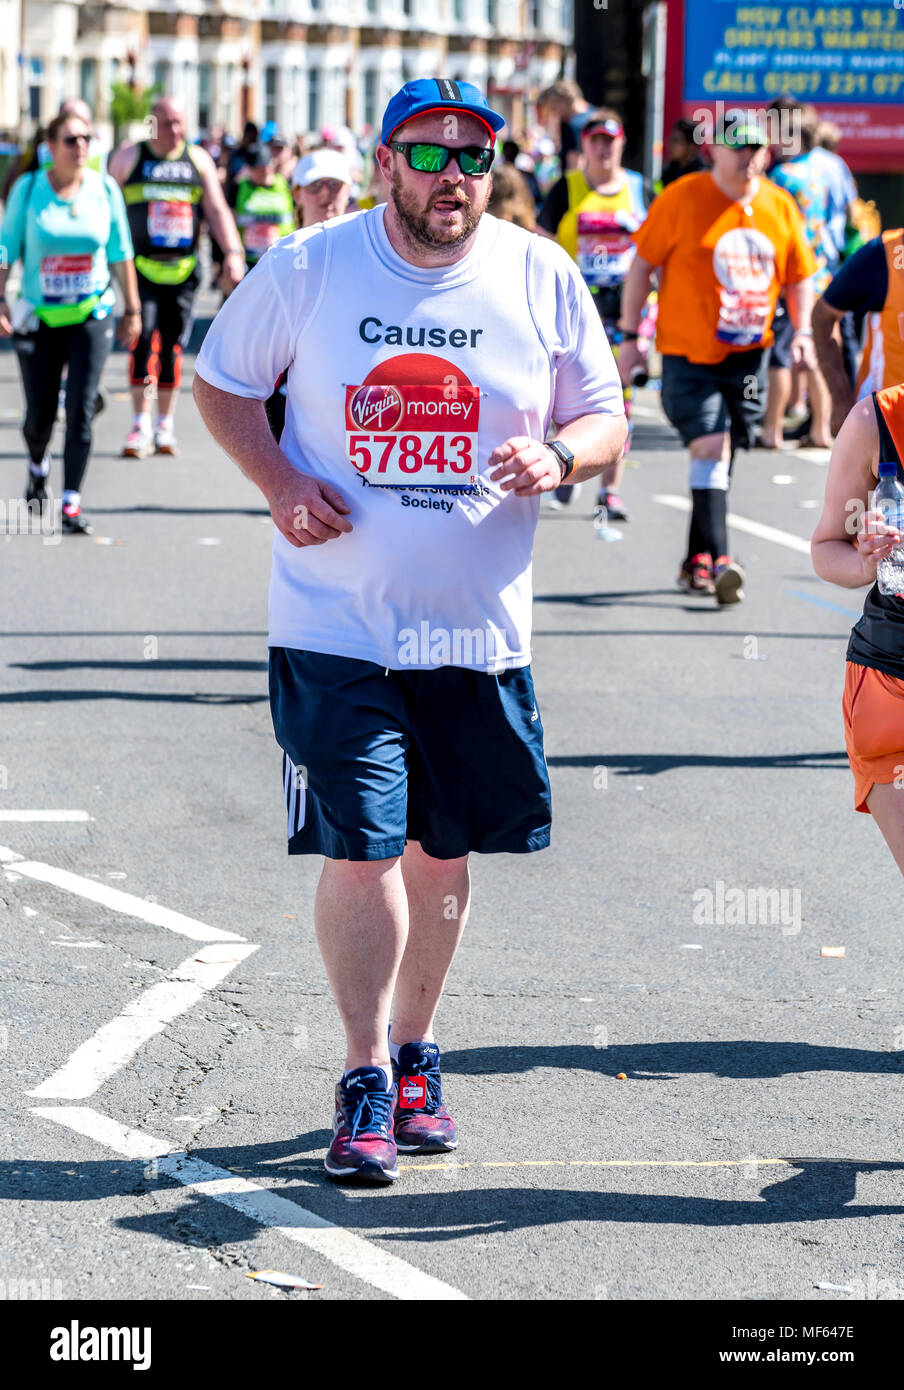 Overweight runner in the 2018 virgin money London marathon Stock Photo